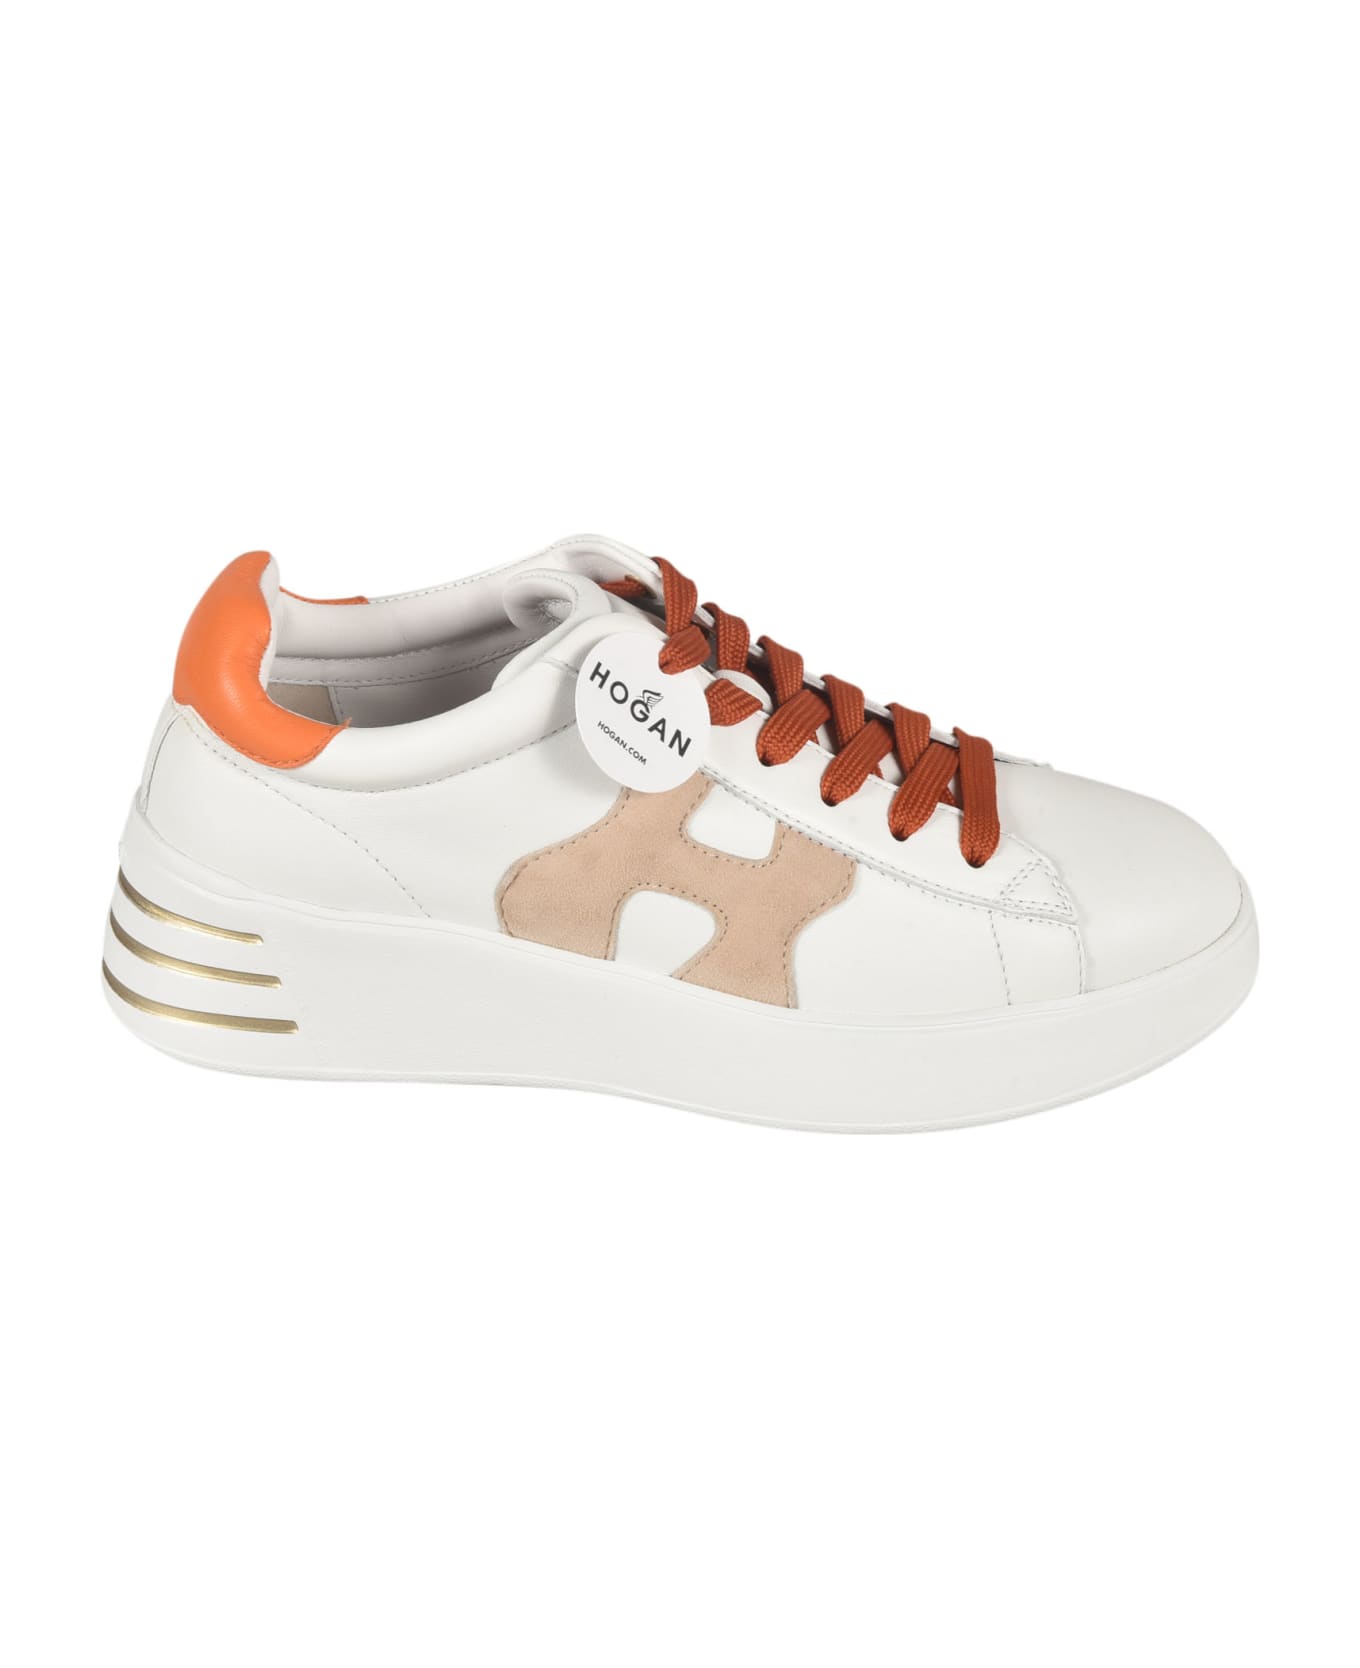 Hogan H564 Rebel Sneakers - White